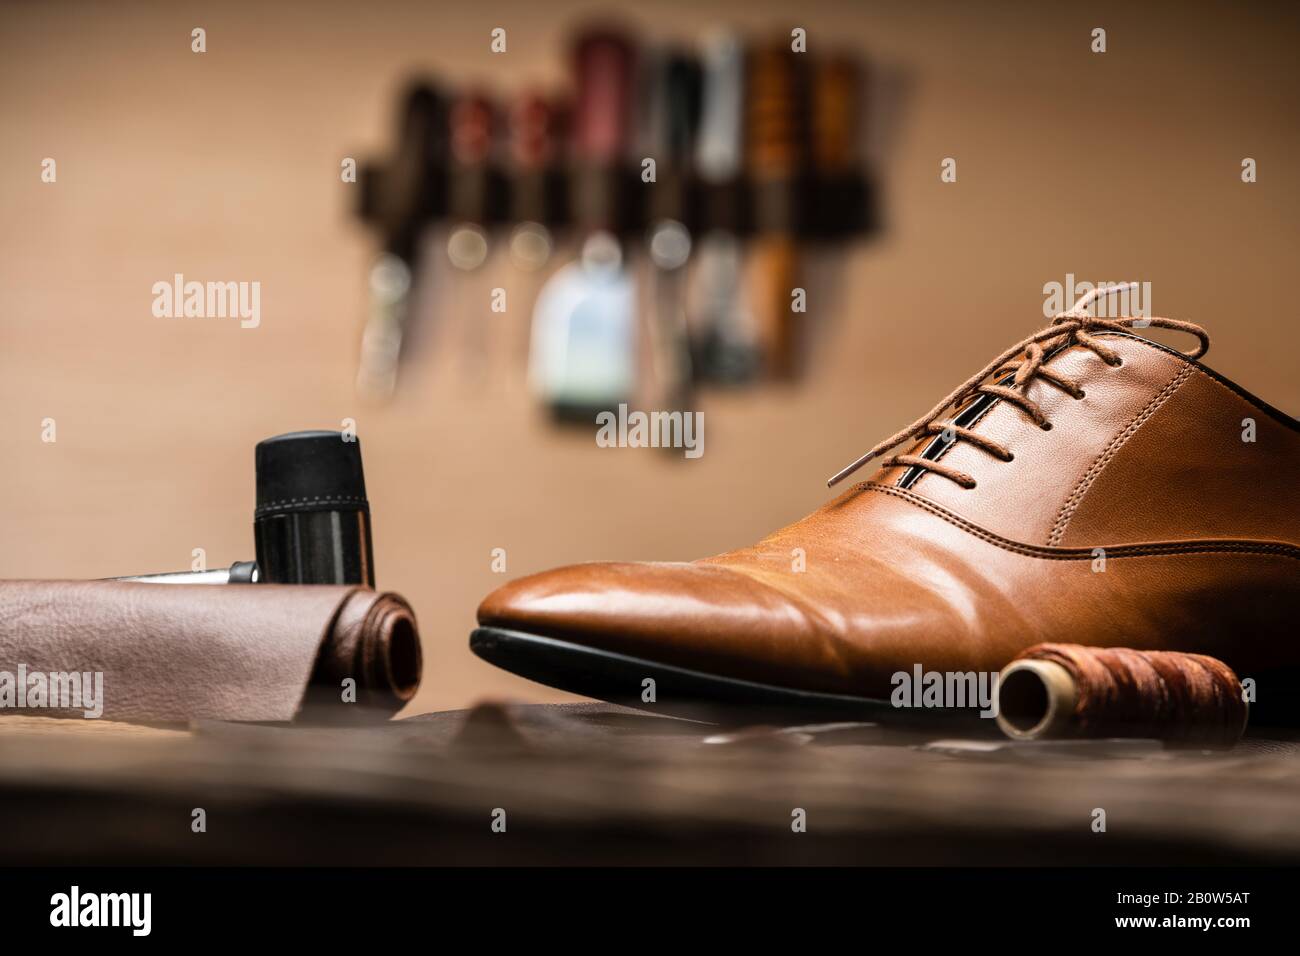 Shoemaker Tools And Finished Shoe On Desk Stock Photo